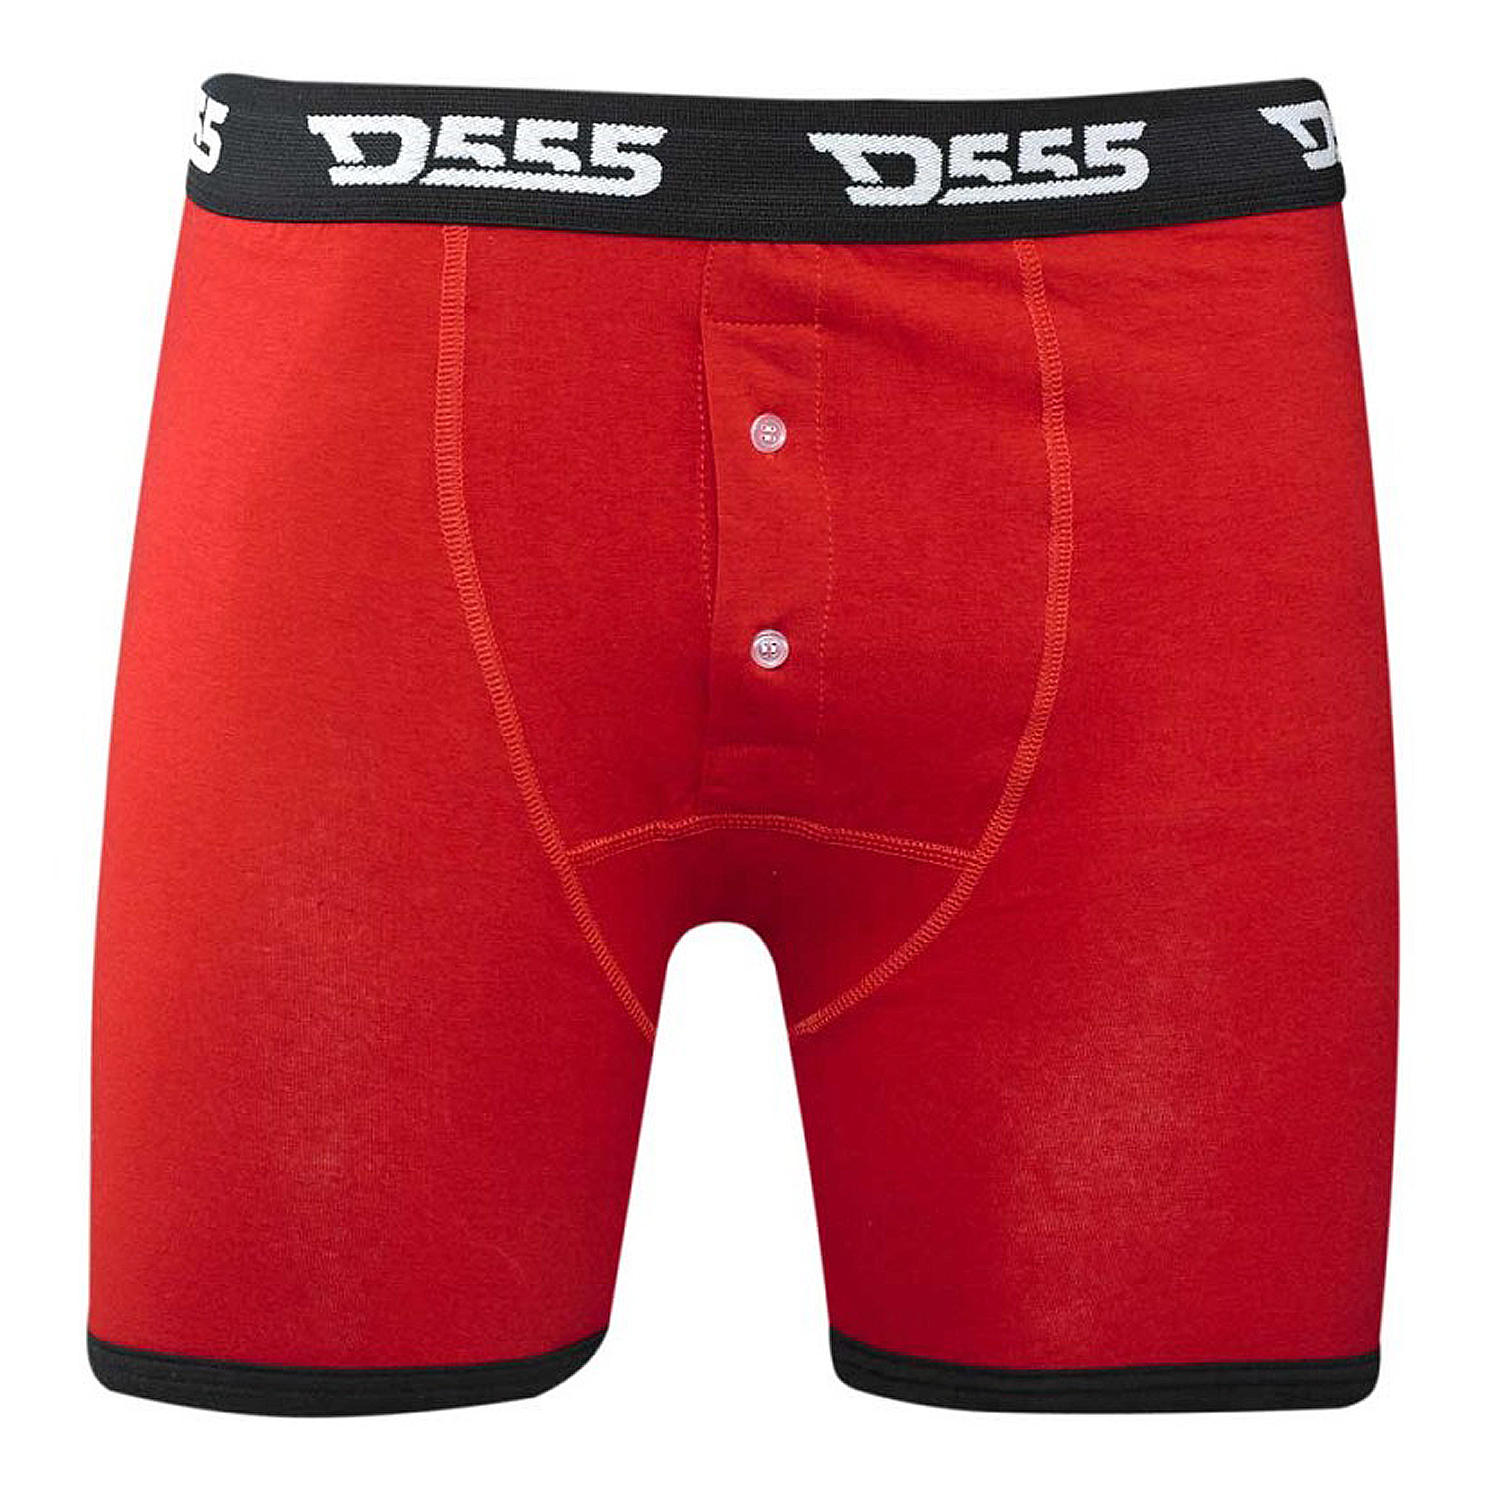 Duke D555 Mens King Size Big Tall Christmas Socks Novelty Festive Xmas Underwear